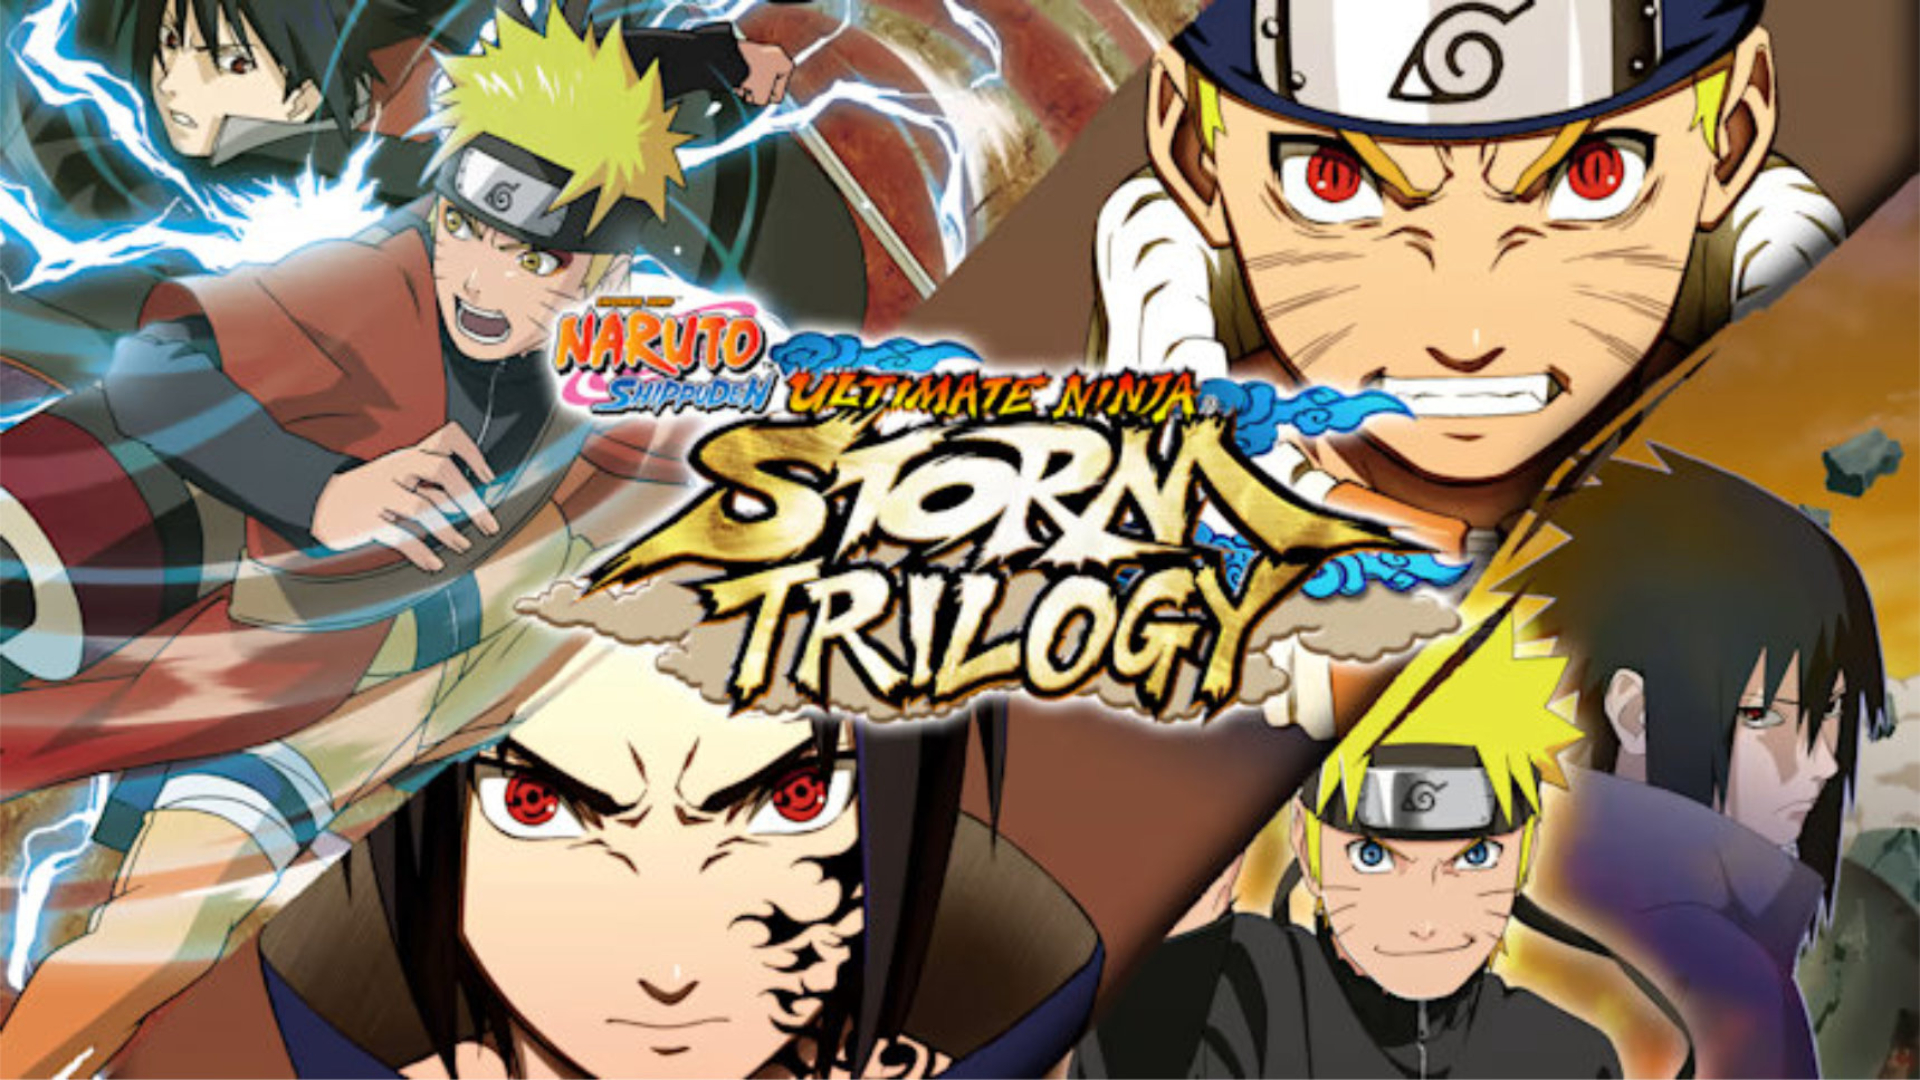 Naruto Ultimate Ninja Storm trilógia